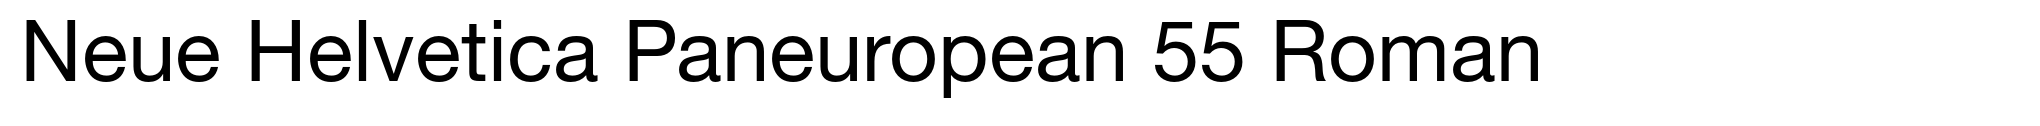 Neue Helvetica Paneuropean 55 Roman image